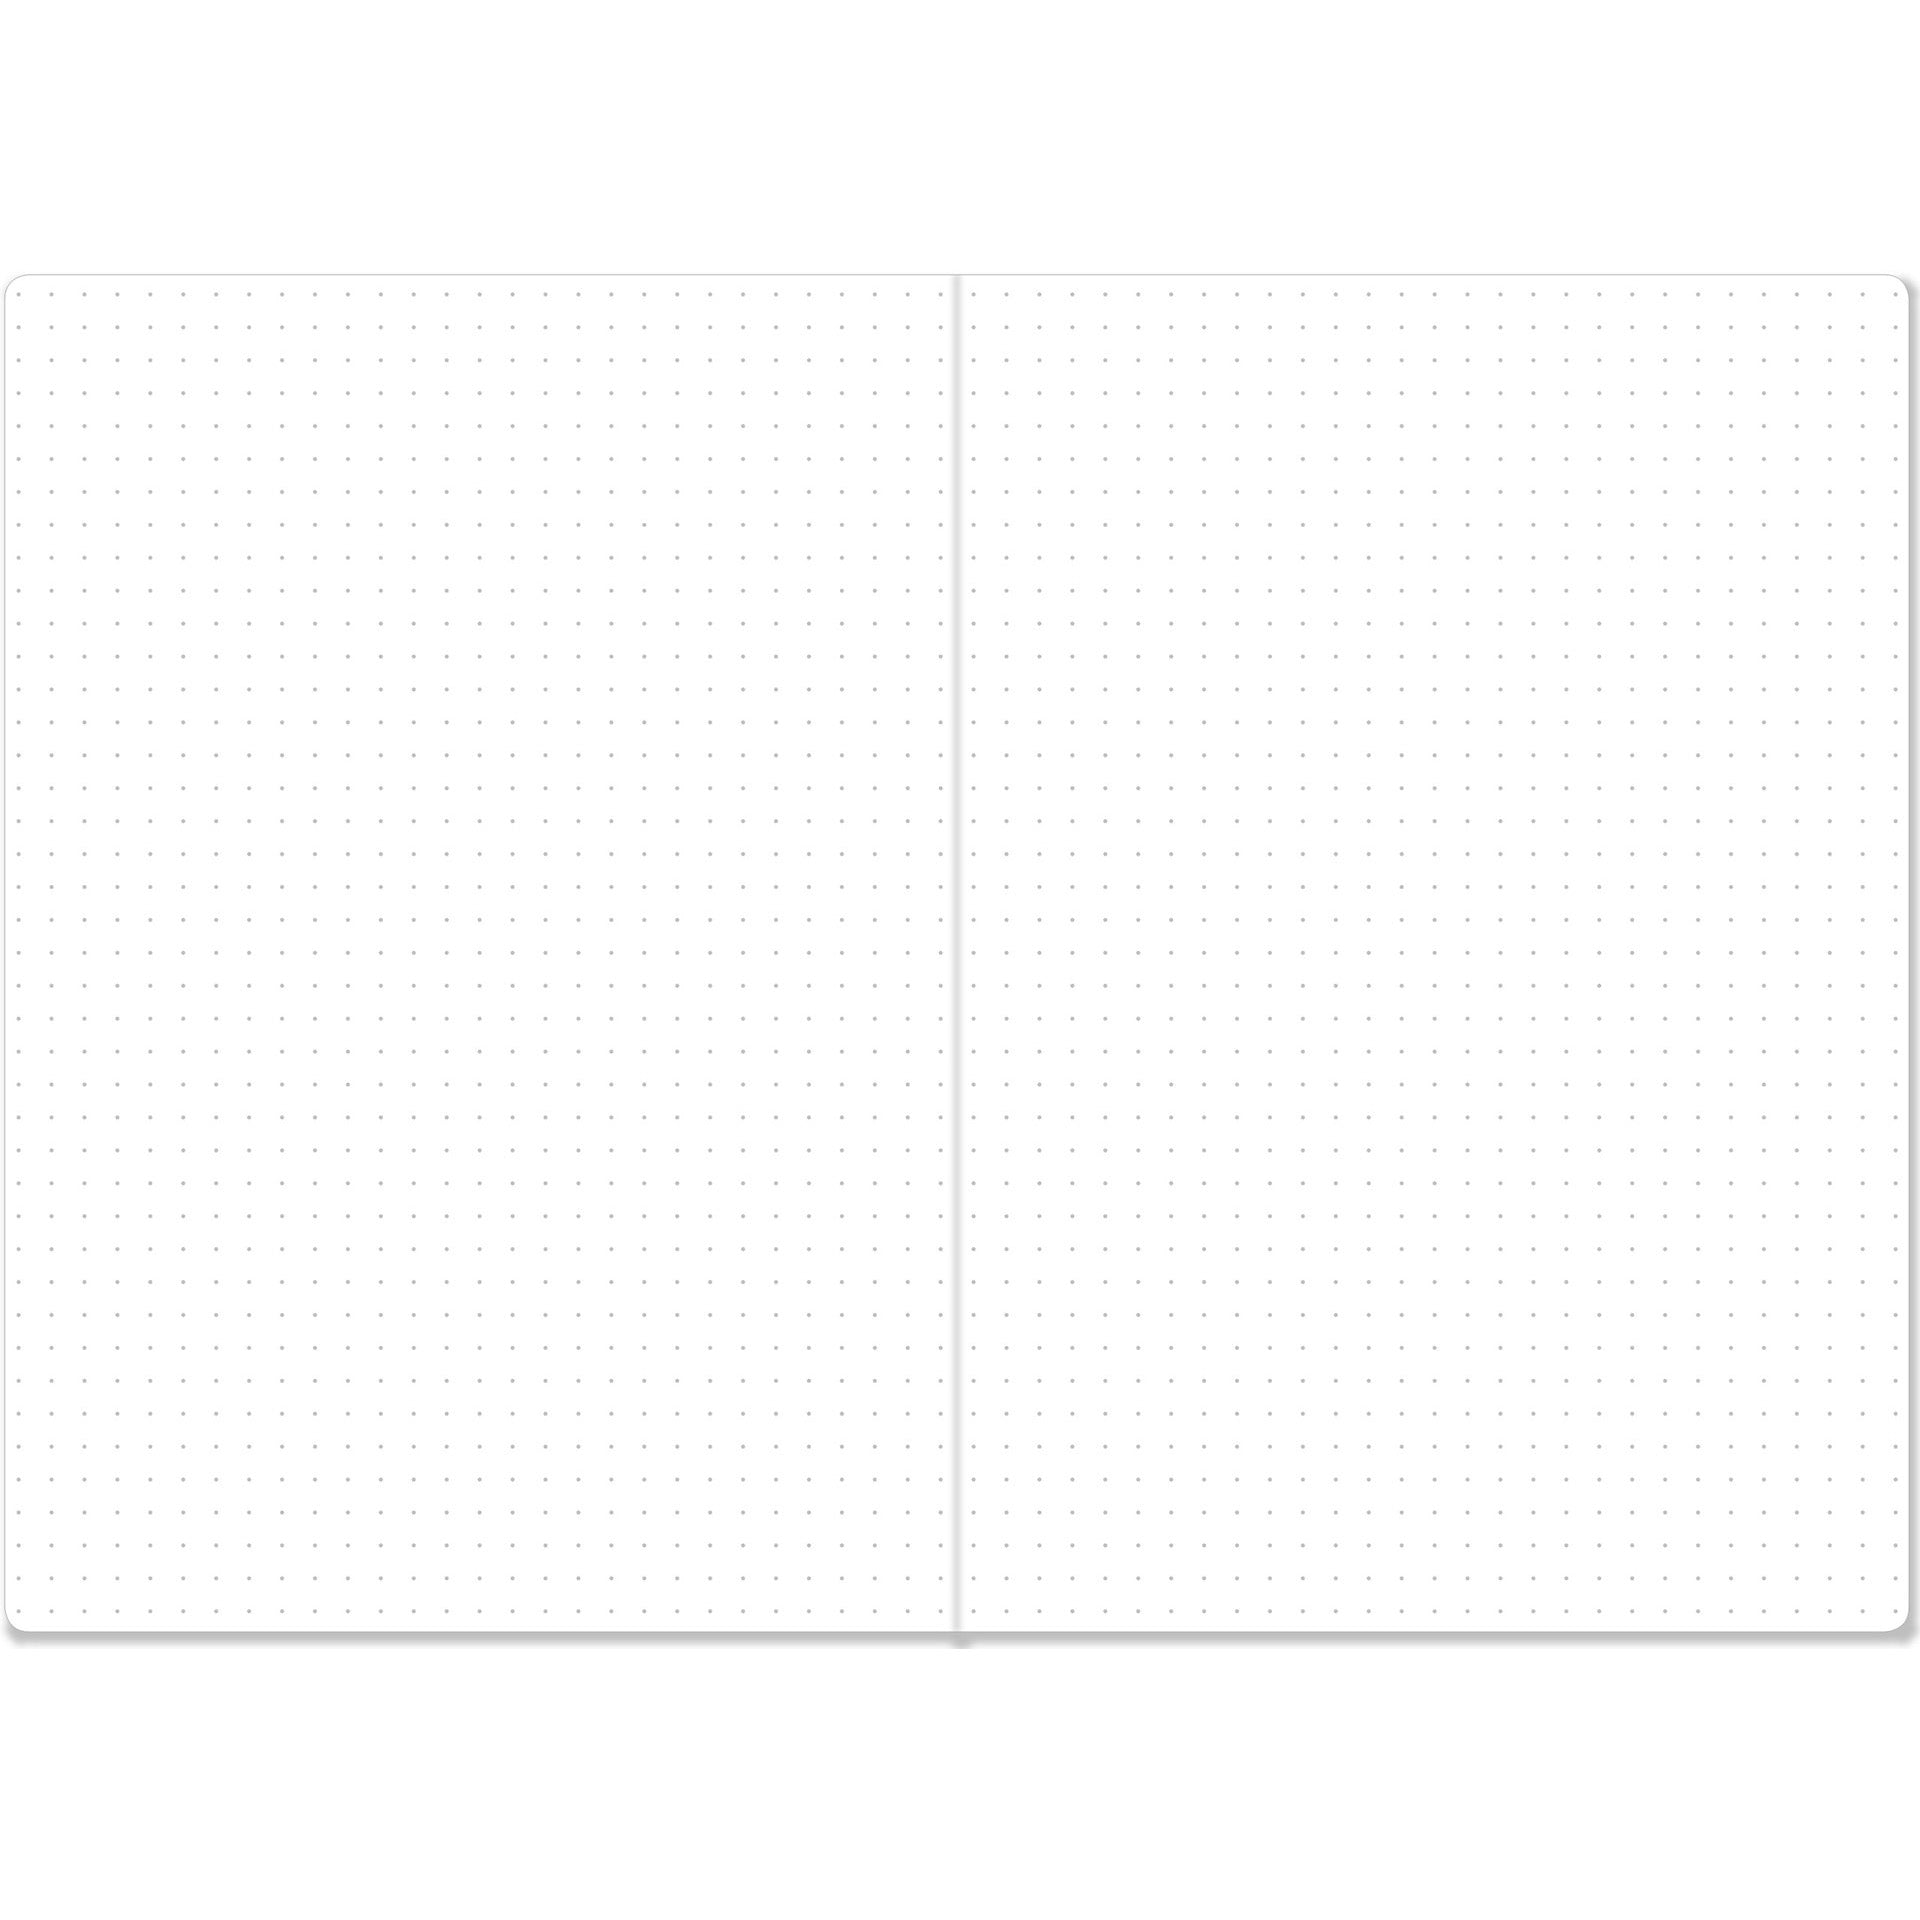 Peter Pauper Press Blue Agate A5 Dot Grid Notebook pages - Paper Kooka